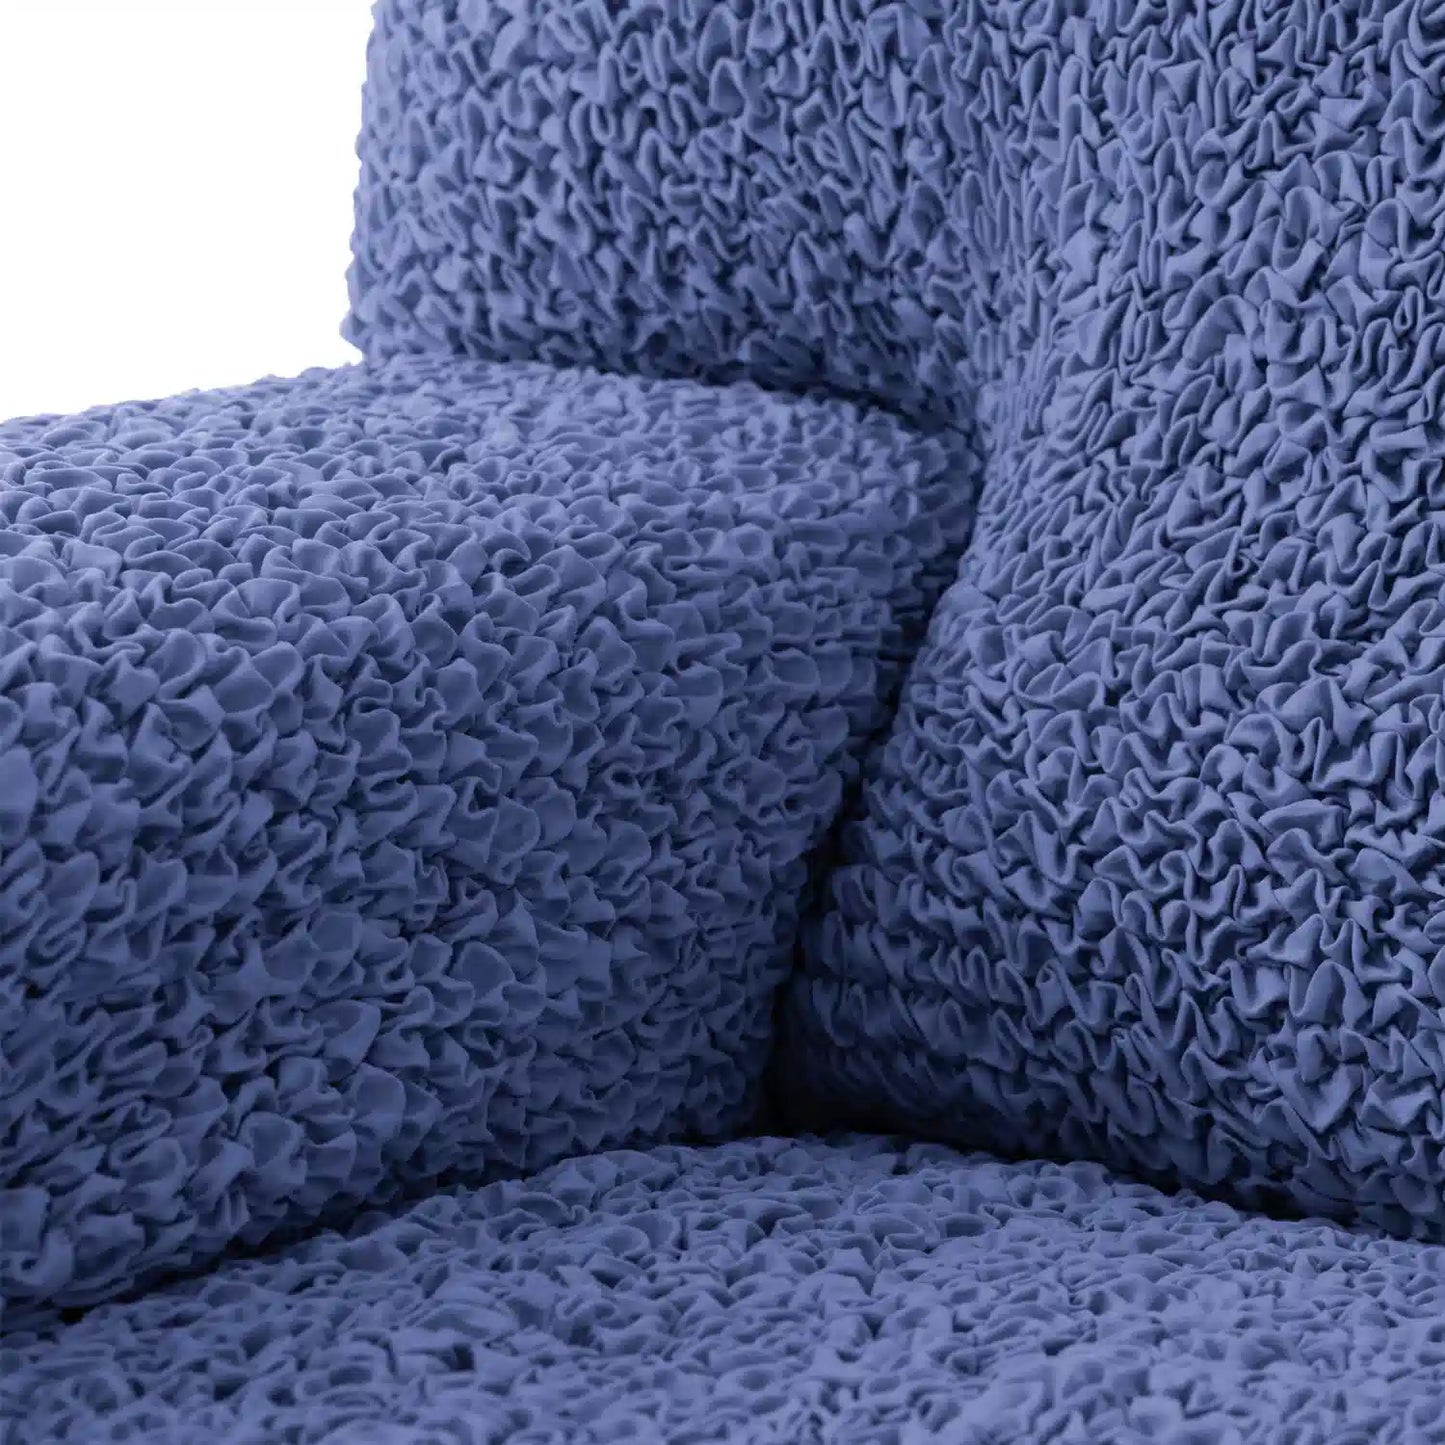 Recliner Chair Cover - Blue, Microfibra